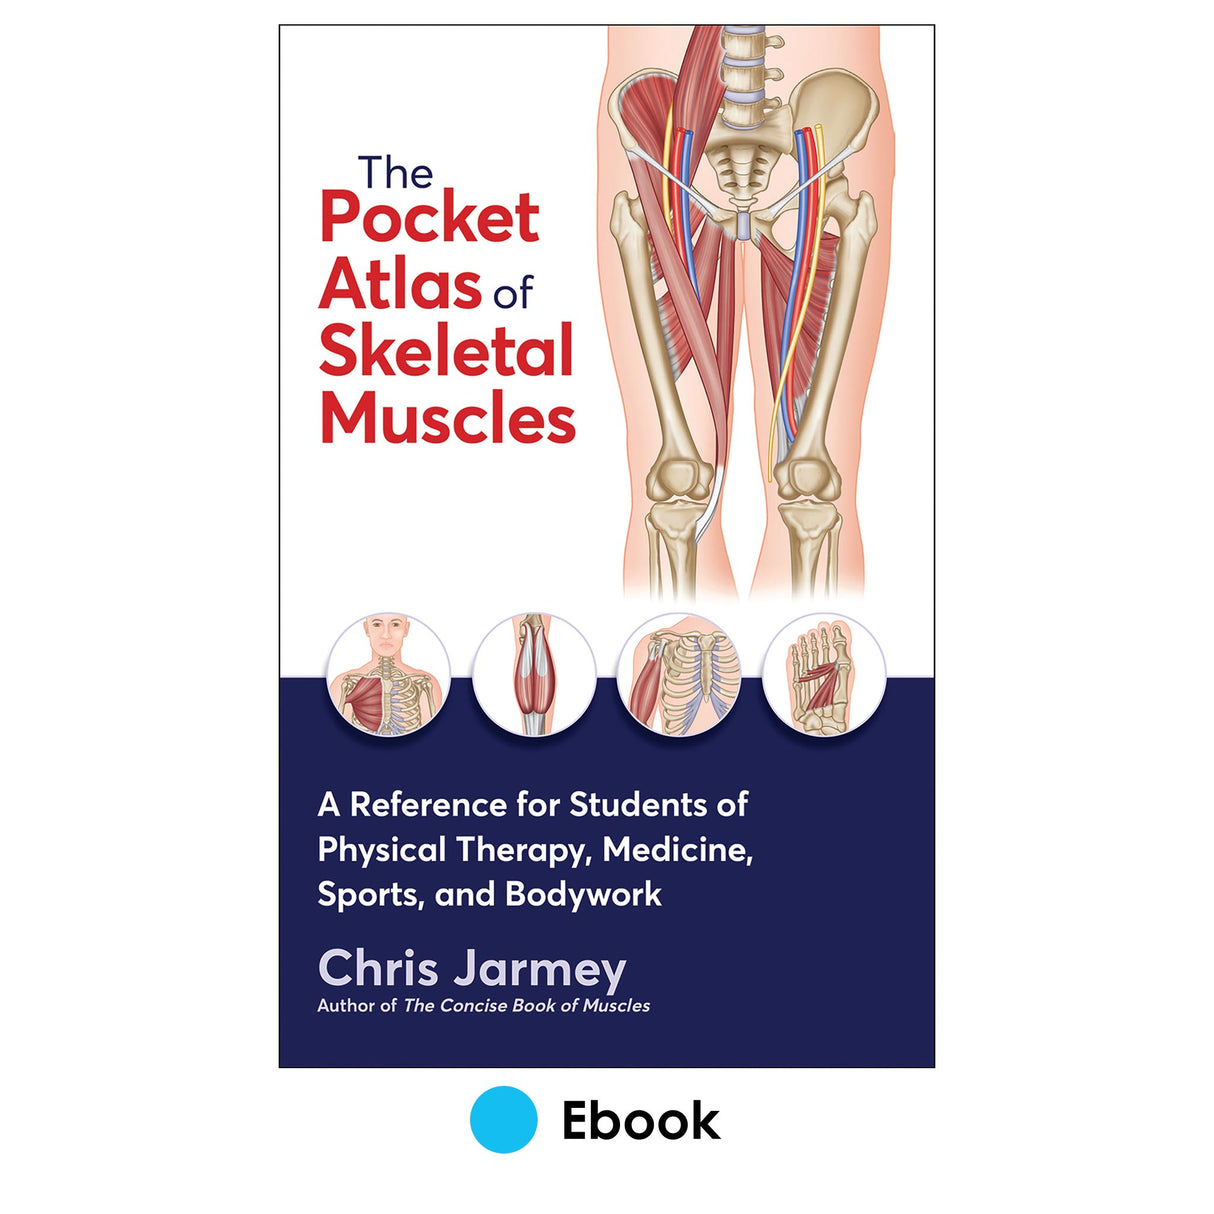 Pocket Atlas of Skeletal Muscles epub, The